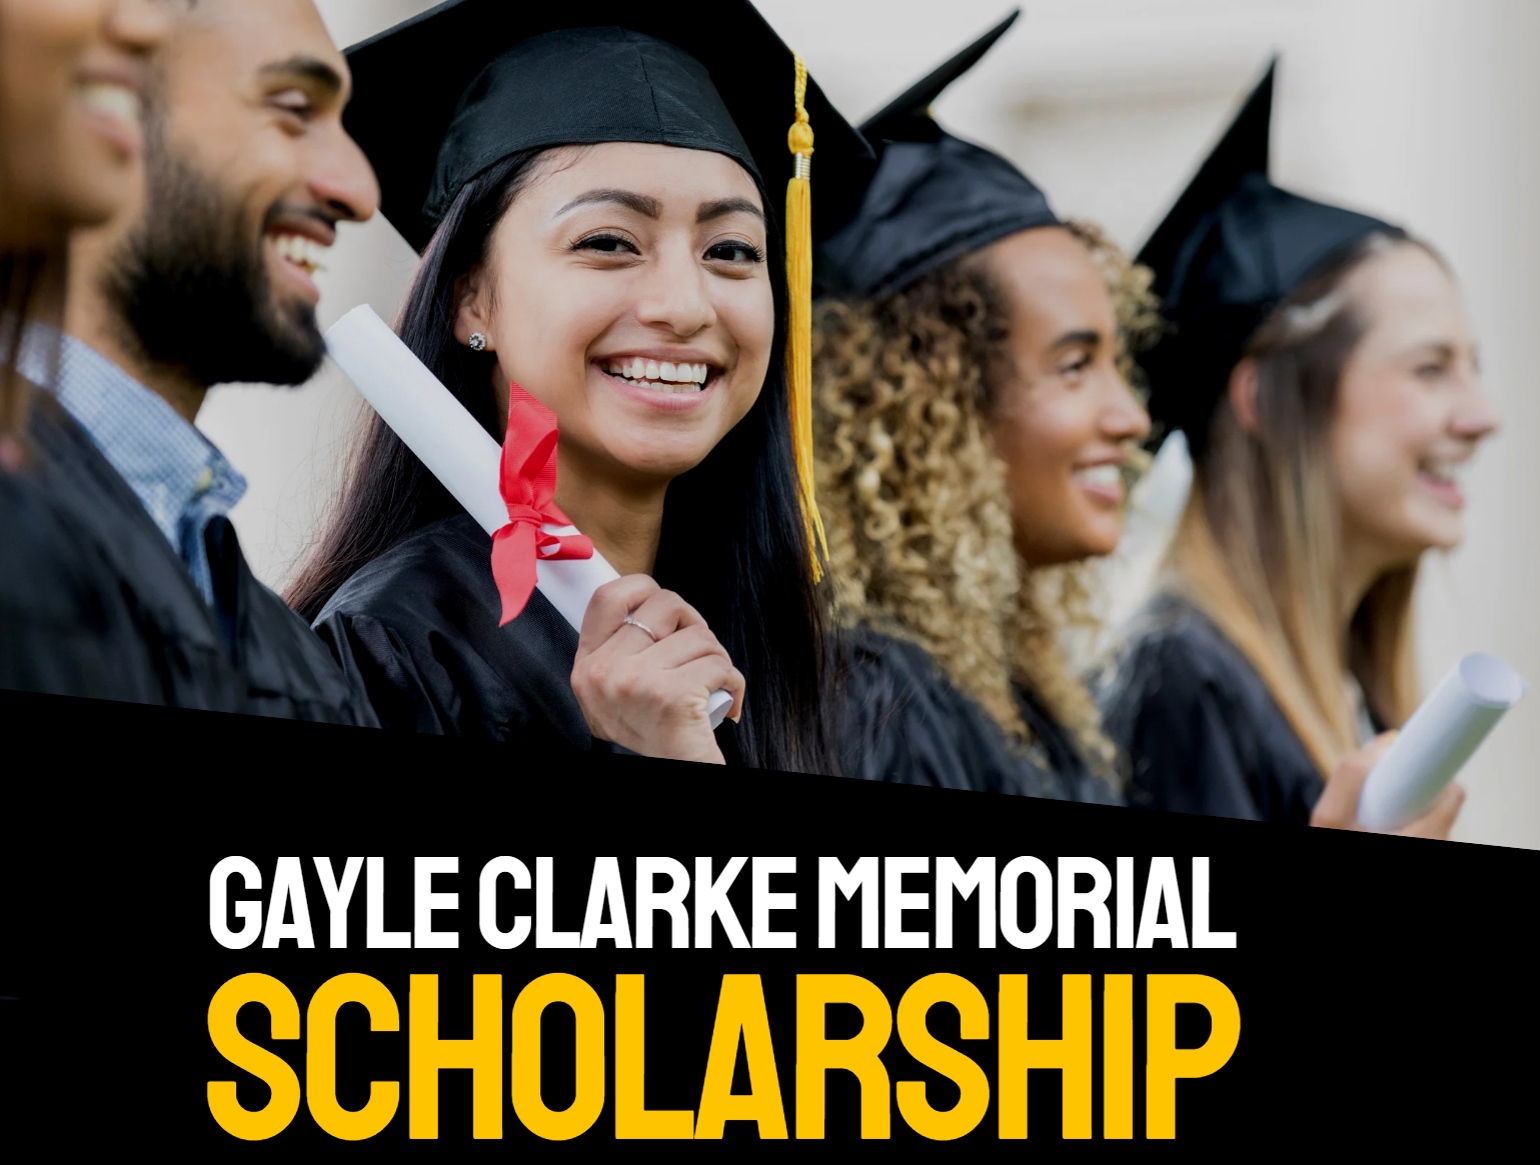 Gayle Clarke Memorial Scholarship